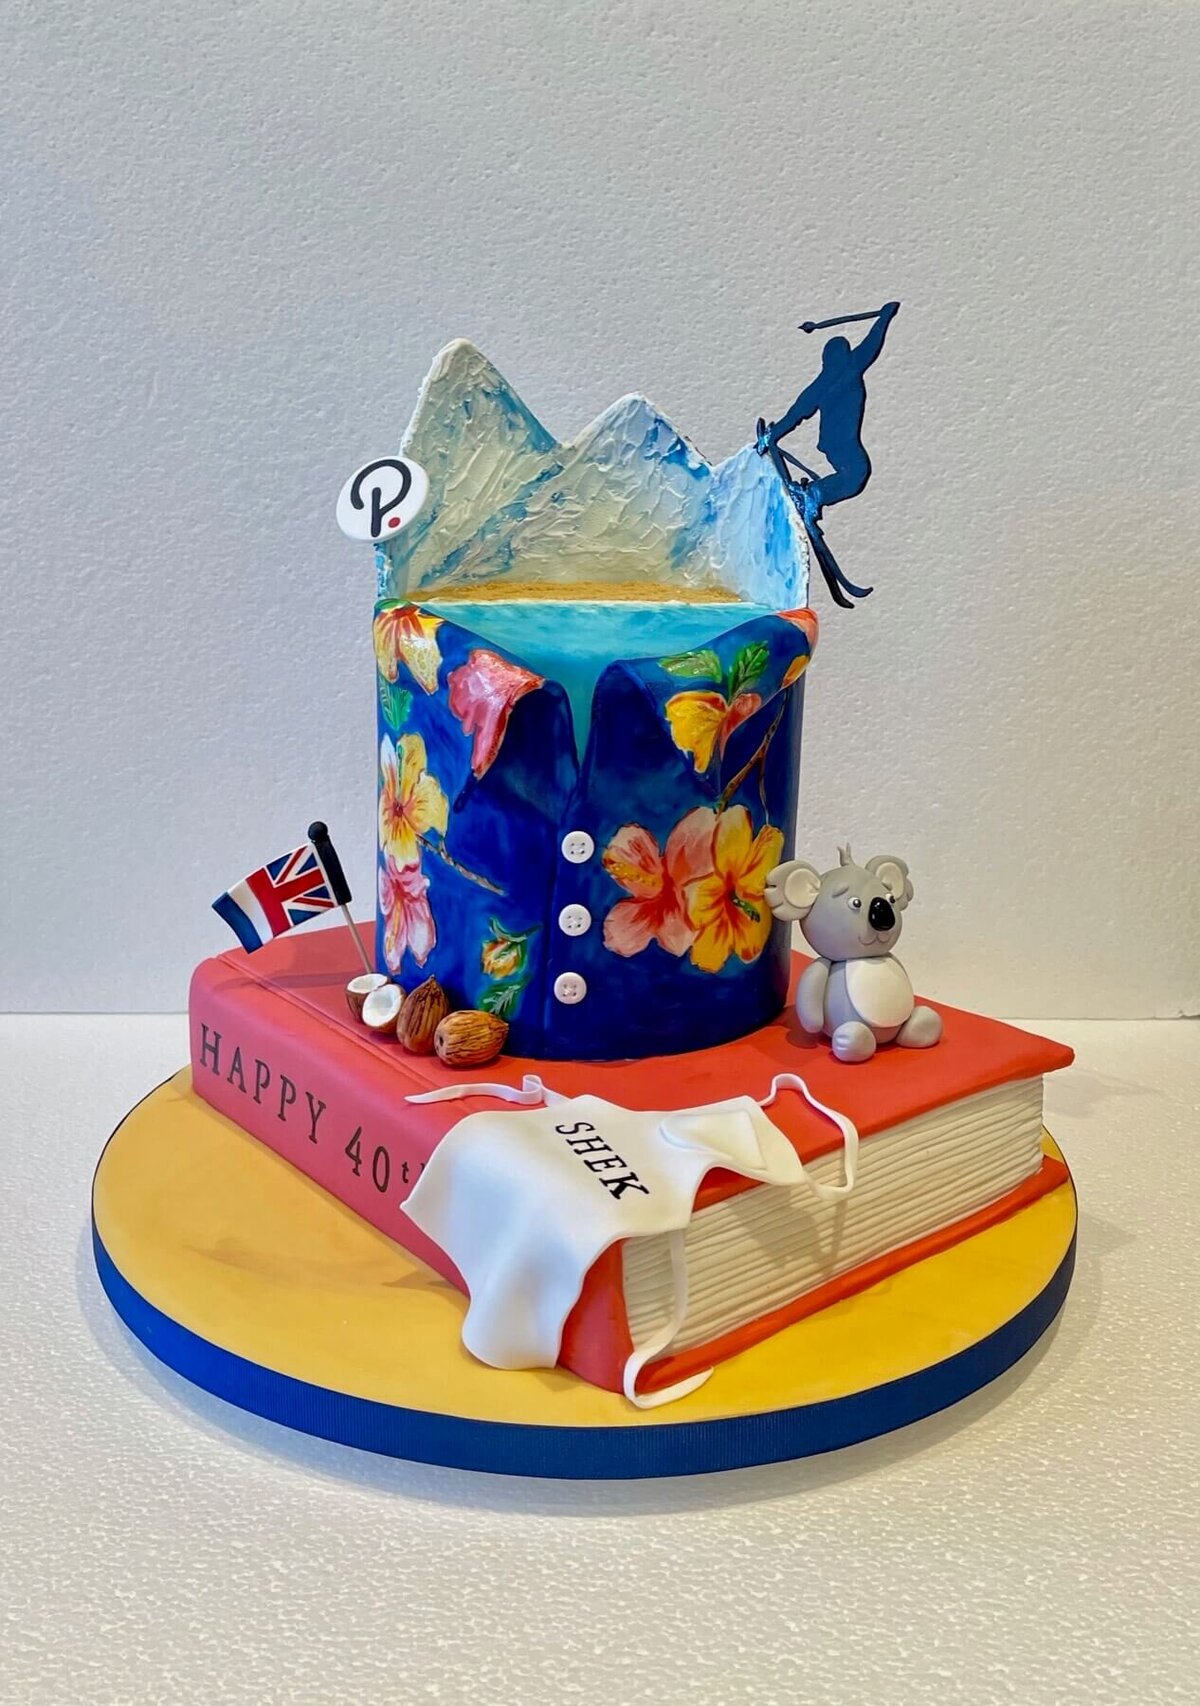 A custom birthday cake with a book, apron, koala, flag and floral shirt